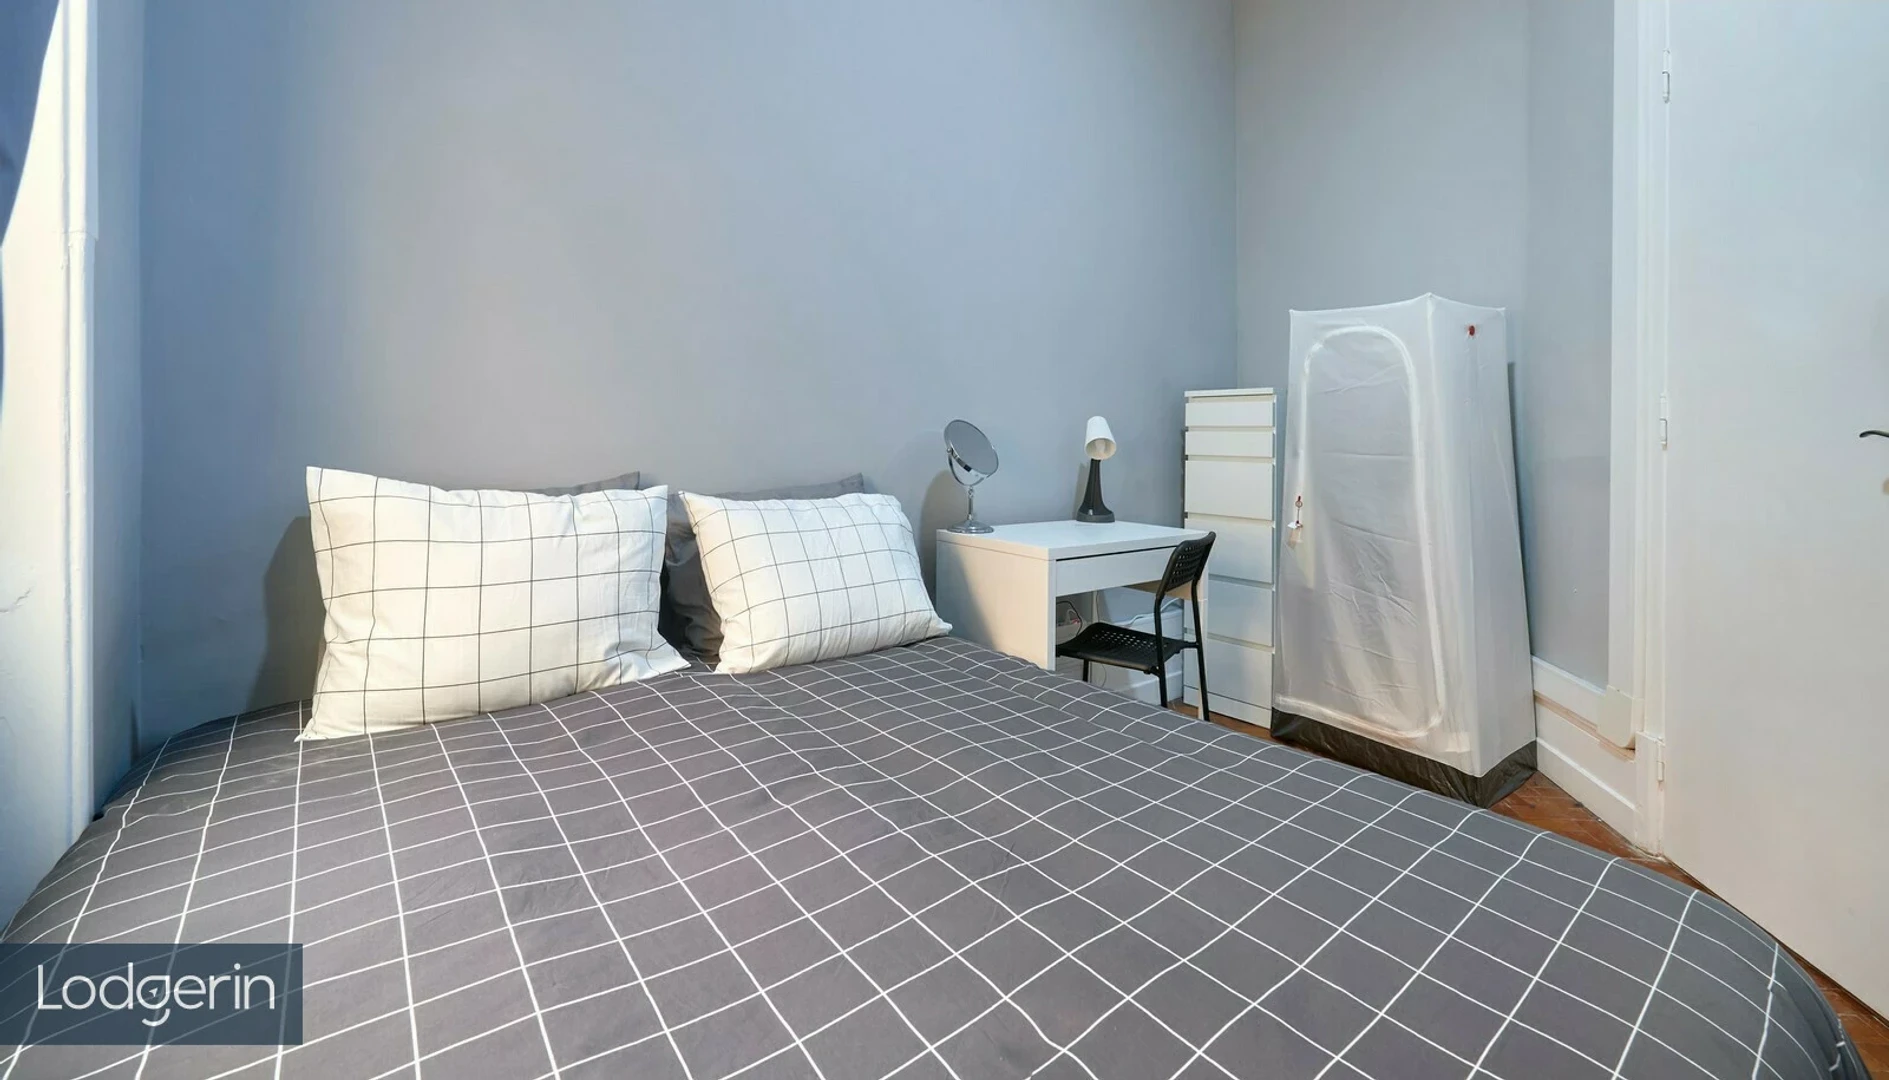 Cheap shared room in Lisbon